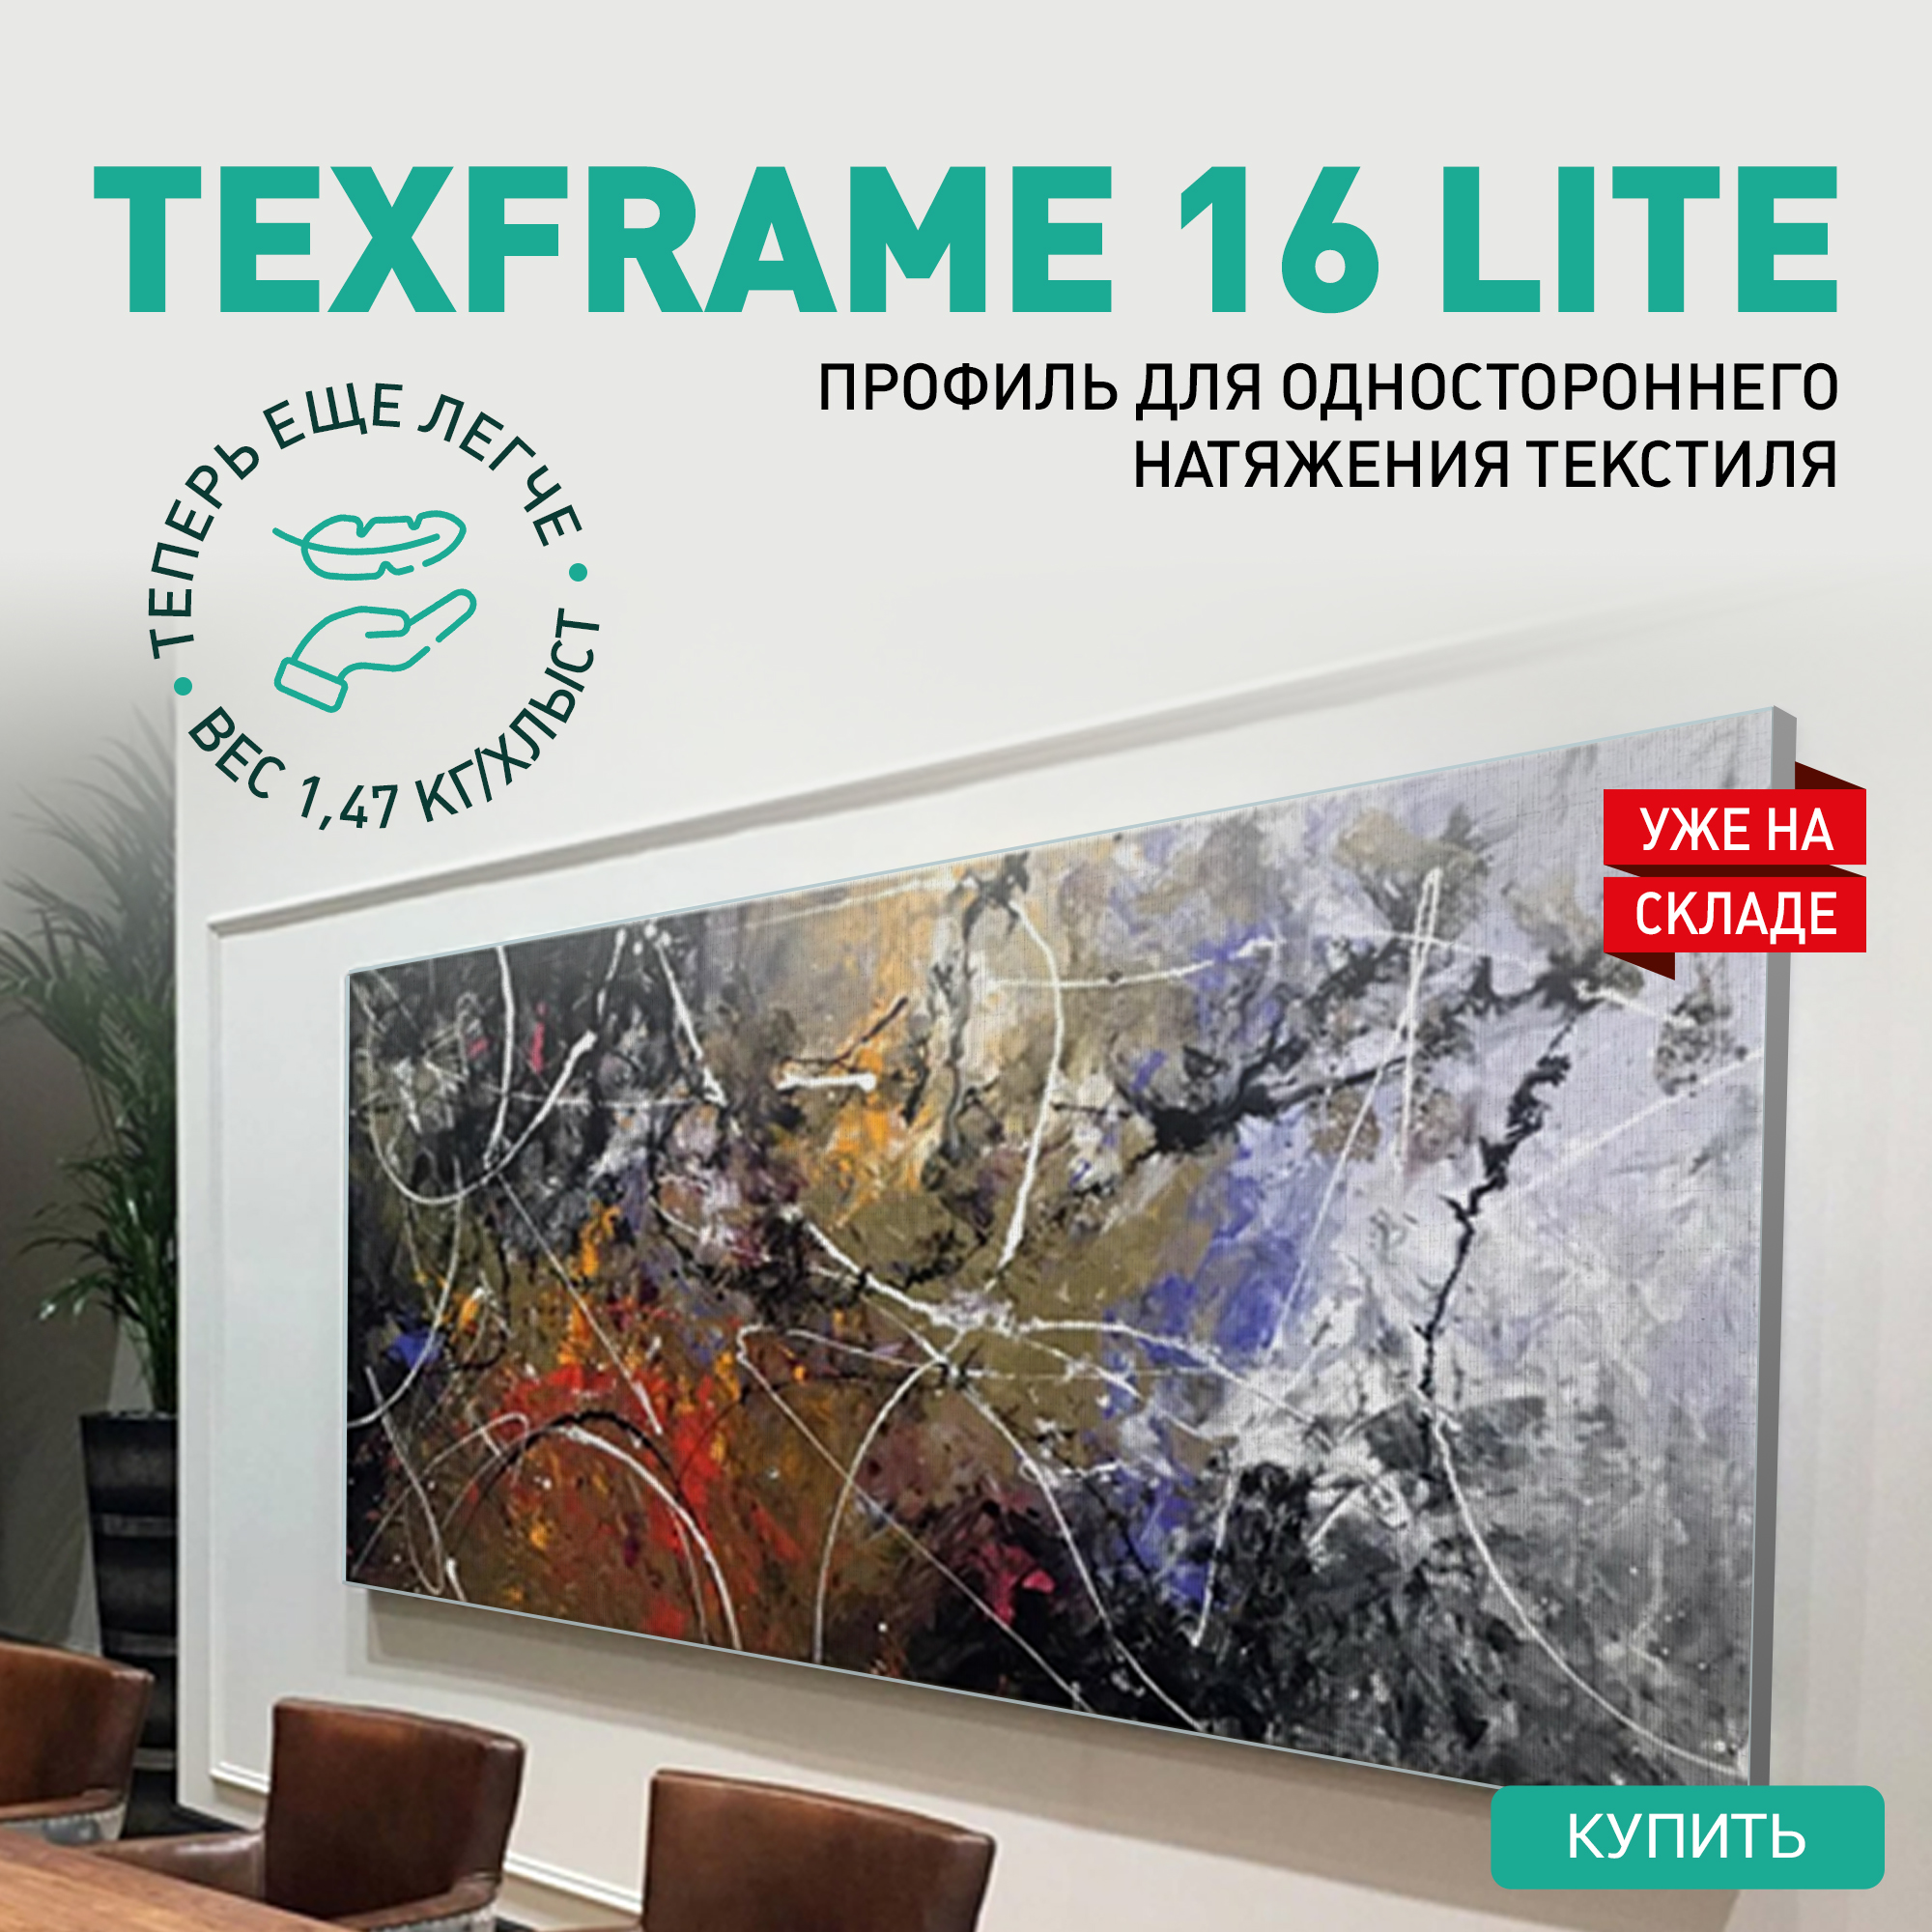 Новинка - профиль для натяжения текстиля TexFrame 16 LITE